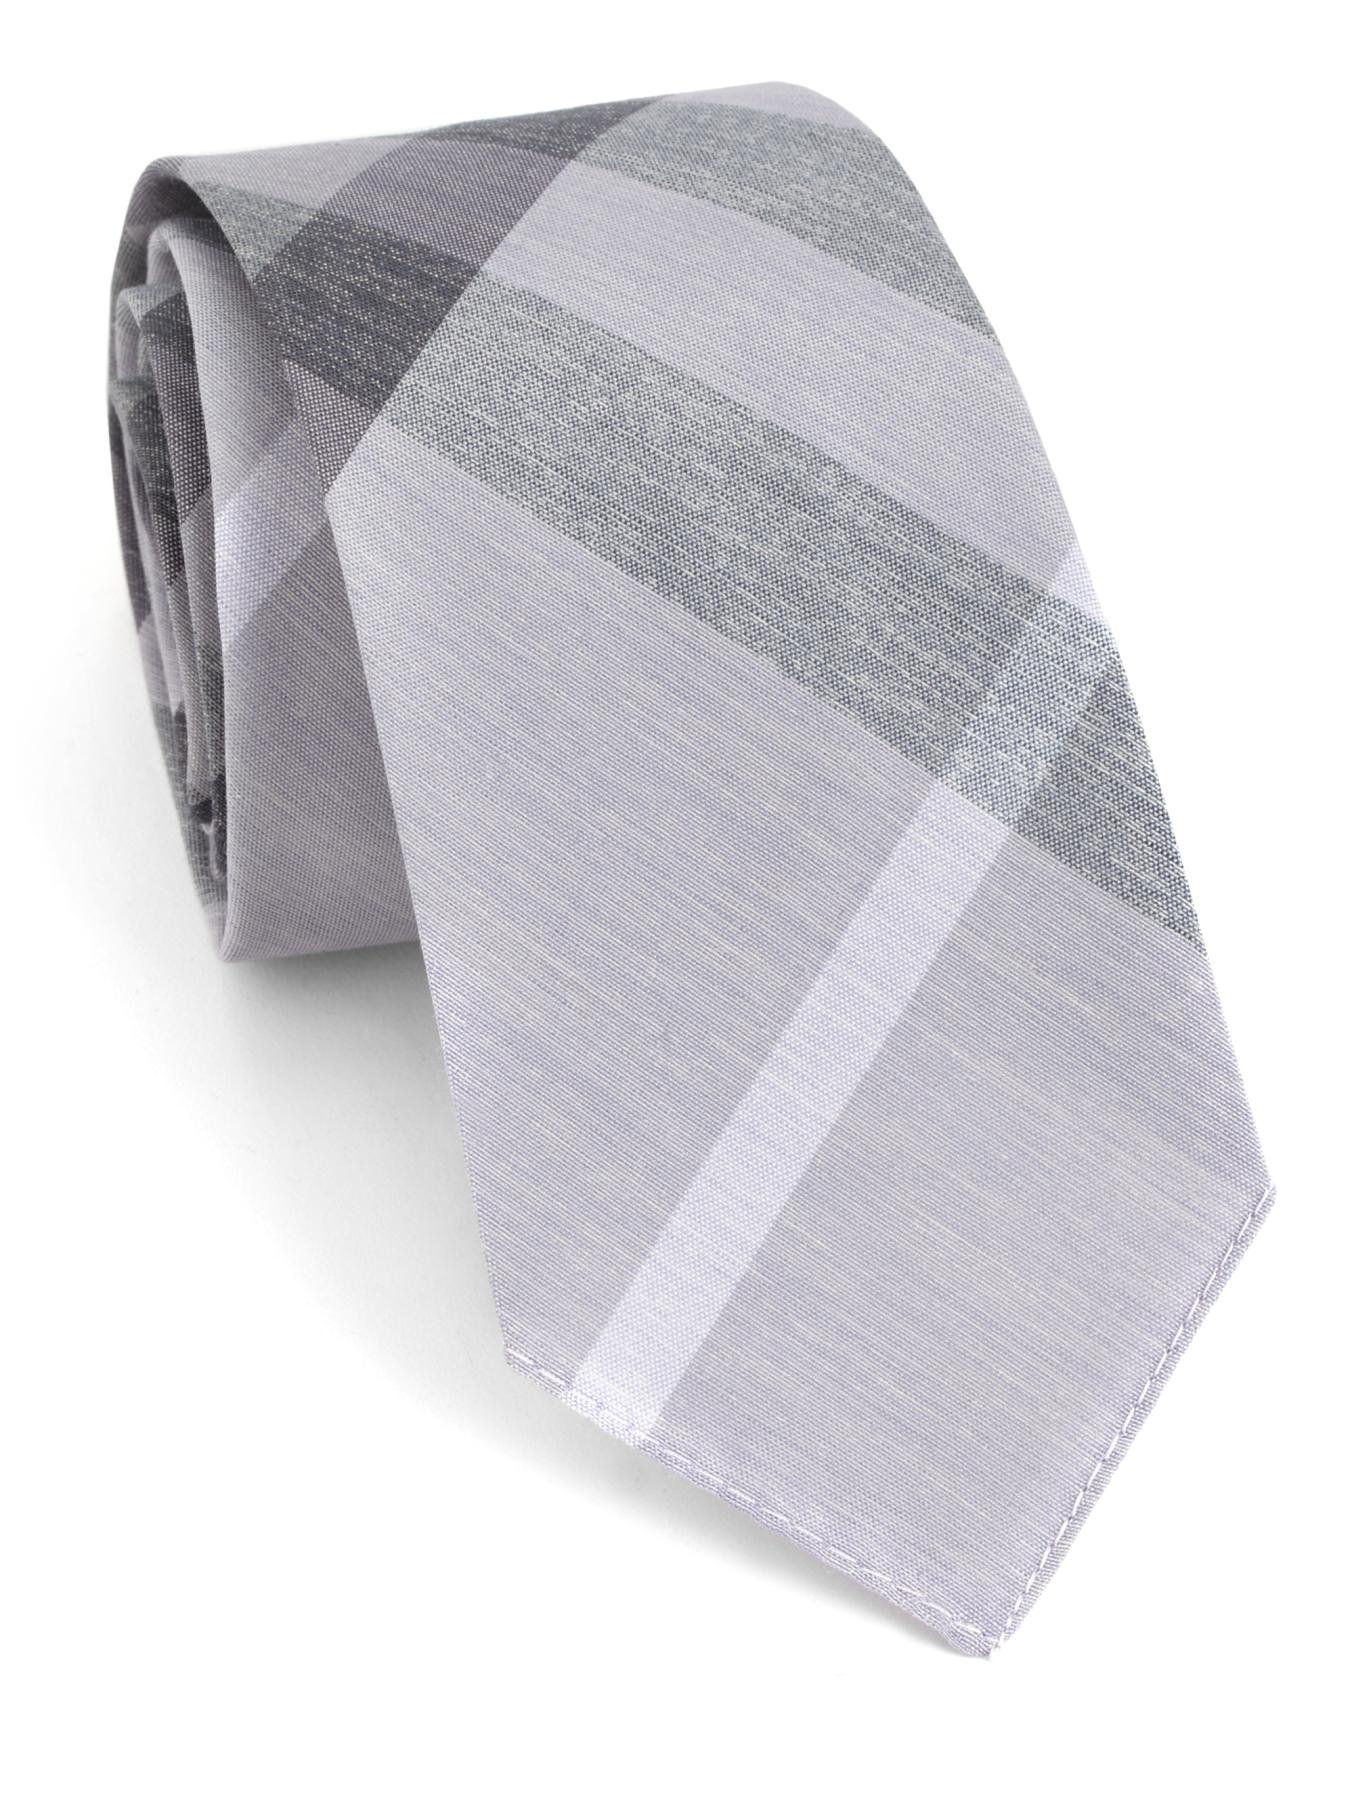 Burberry Textured Silk Check Tie in Light-Lavender (Purple) for Men - Lyst